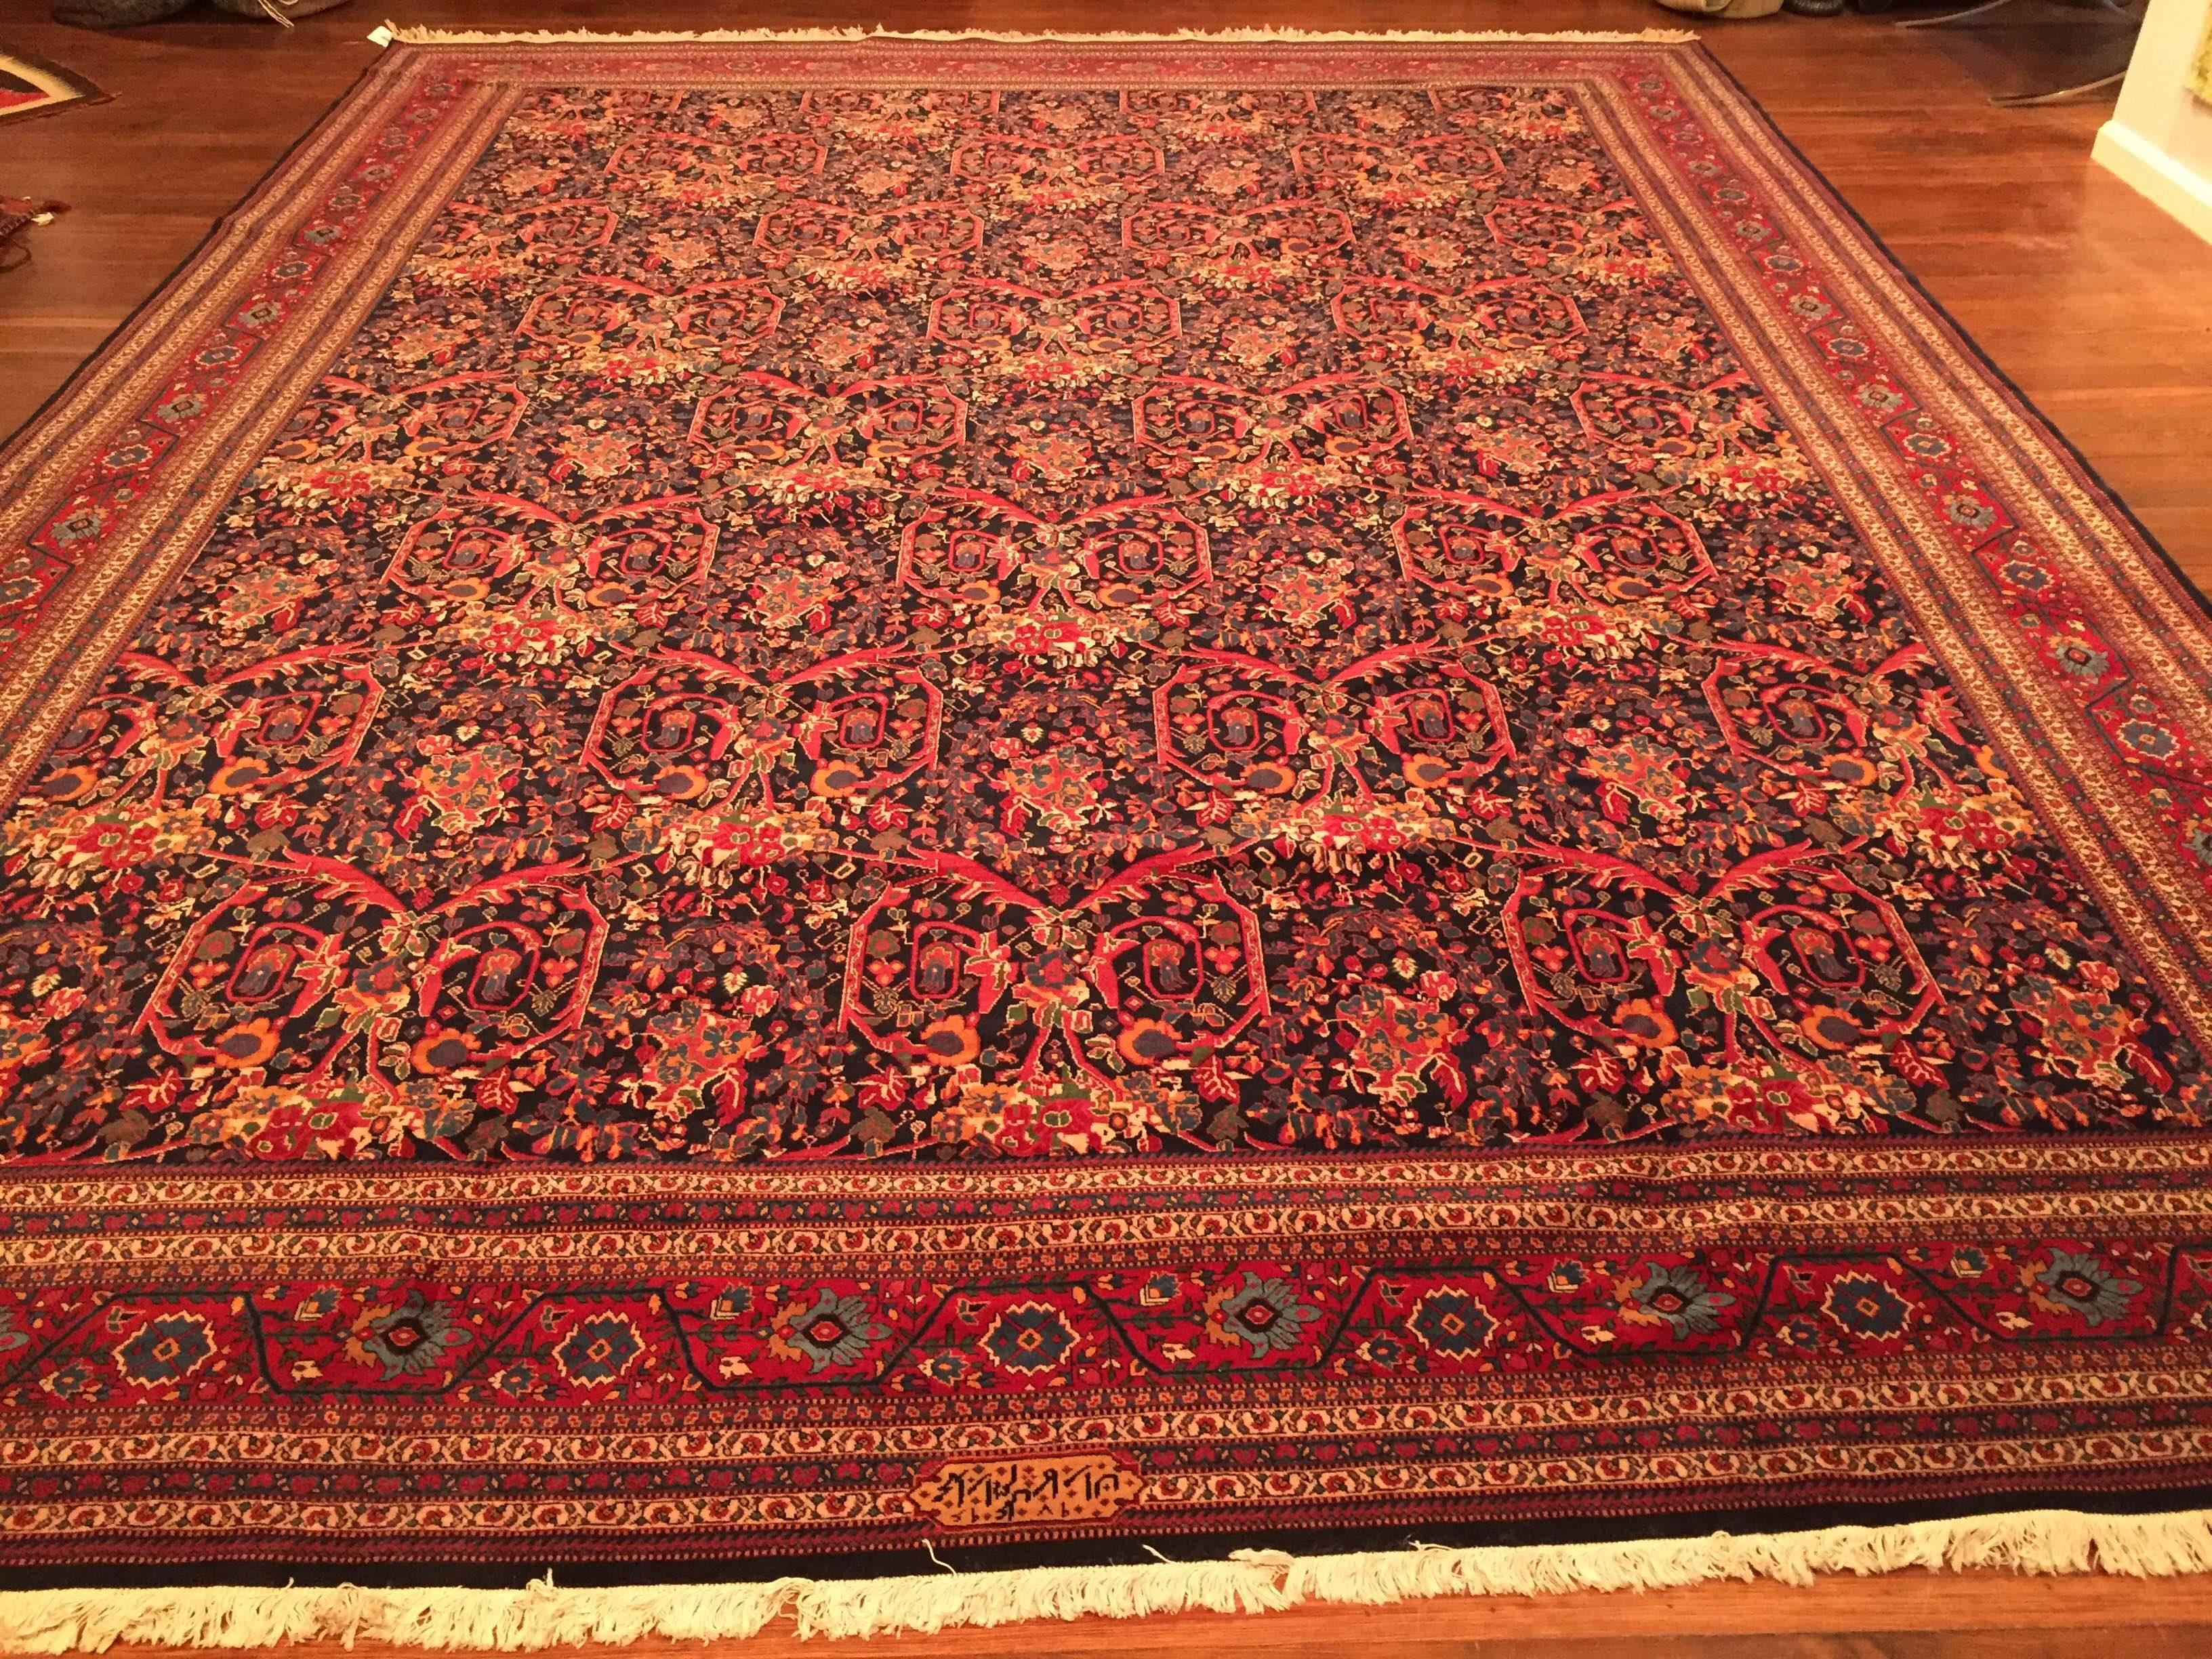 An antique Persian Farahan rug, circa 1920. Signed by masterweaver.